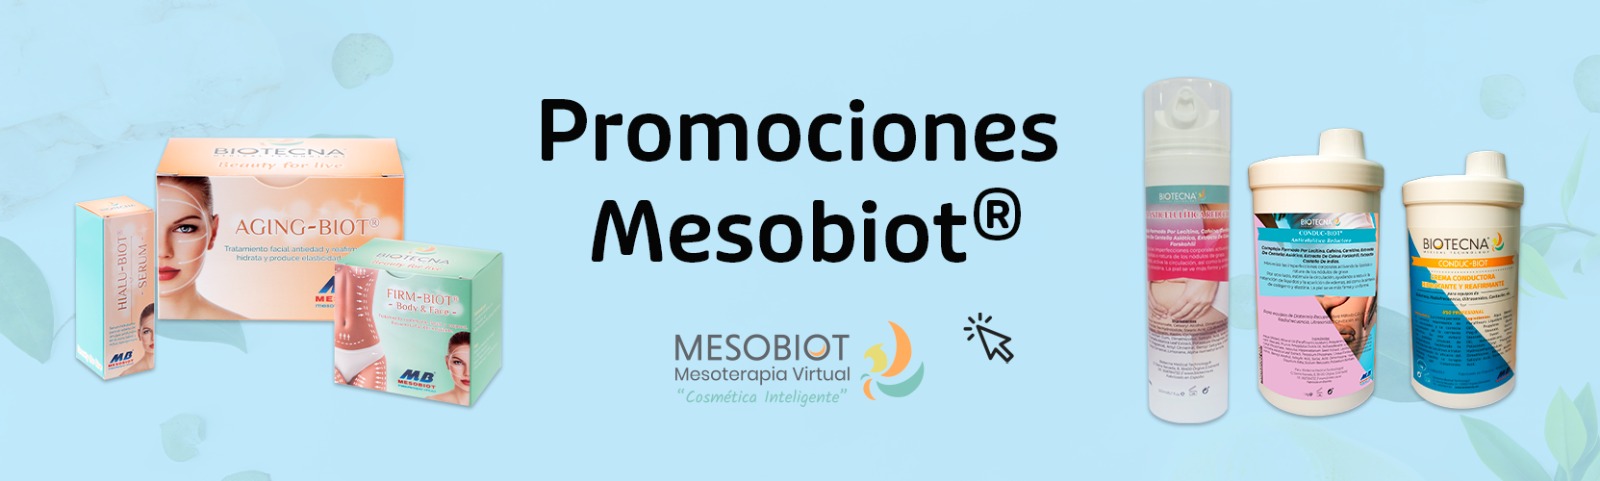 promo-mesobiot